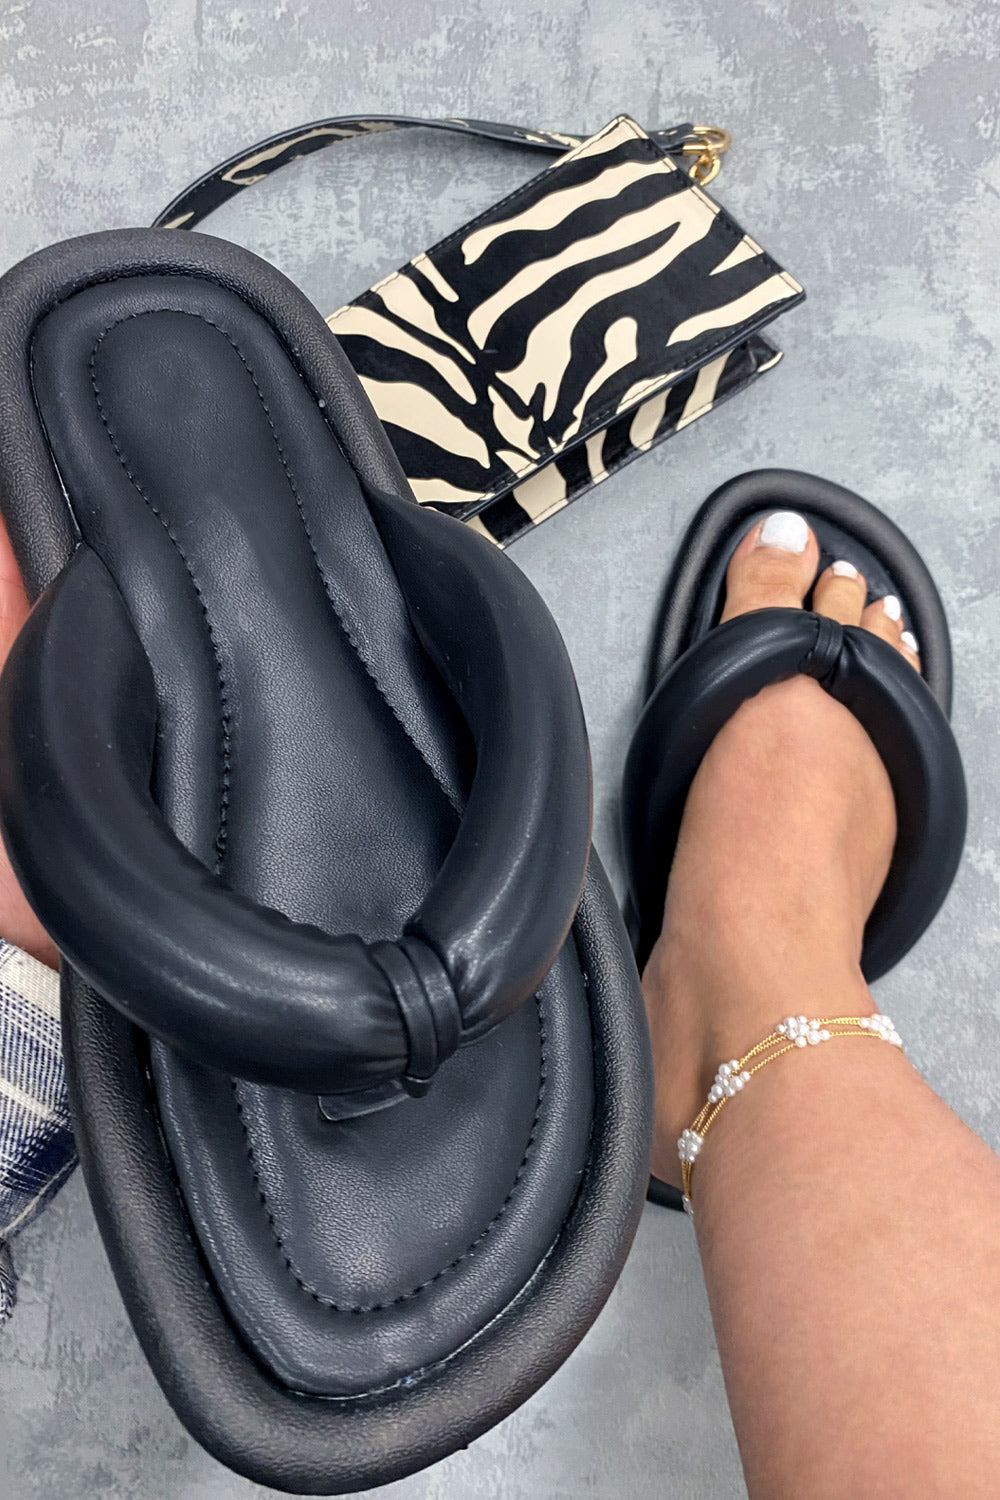 Black Pu Padded Thong mule Sandals